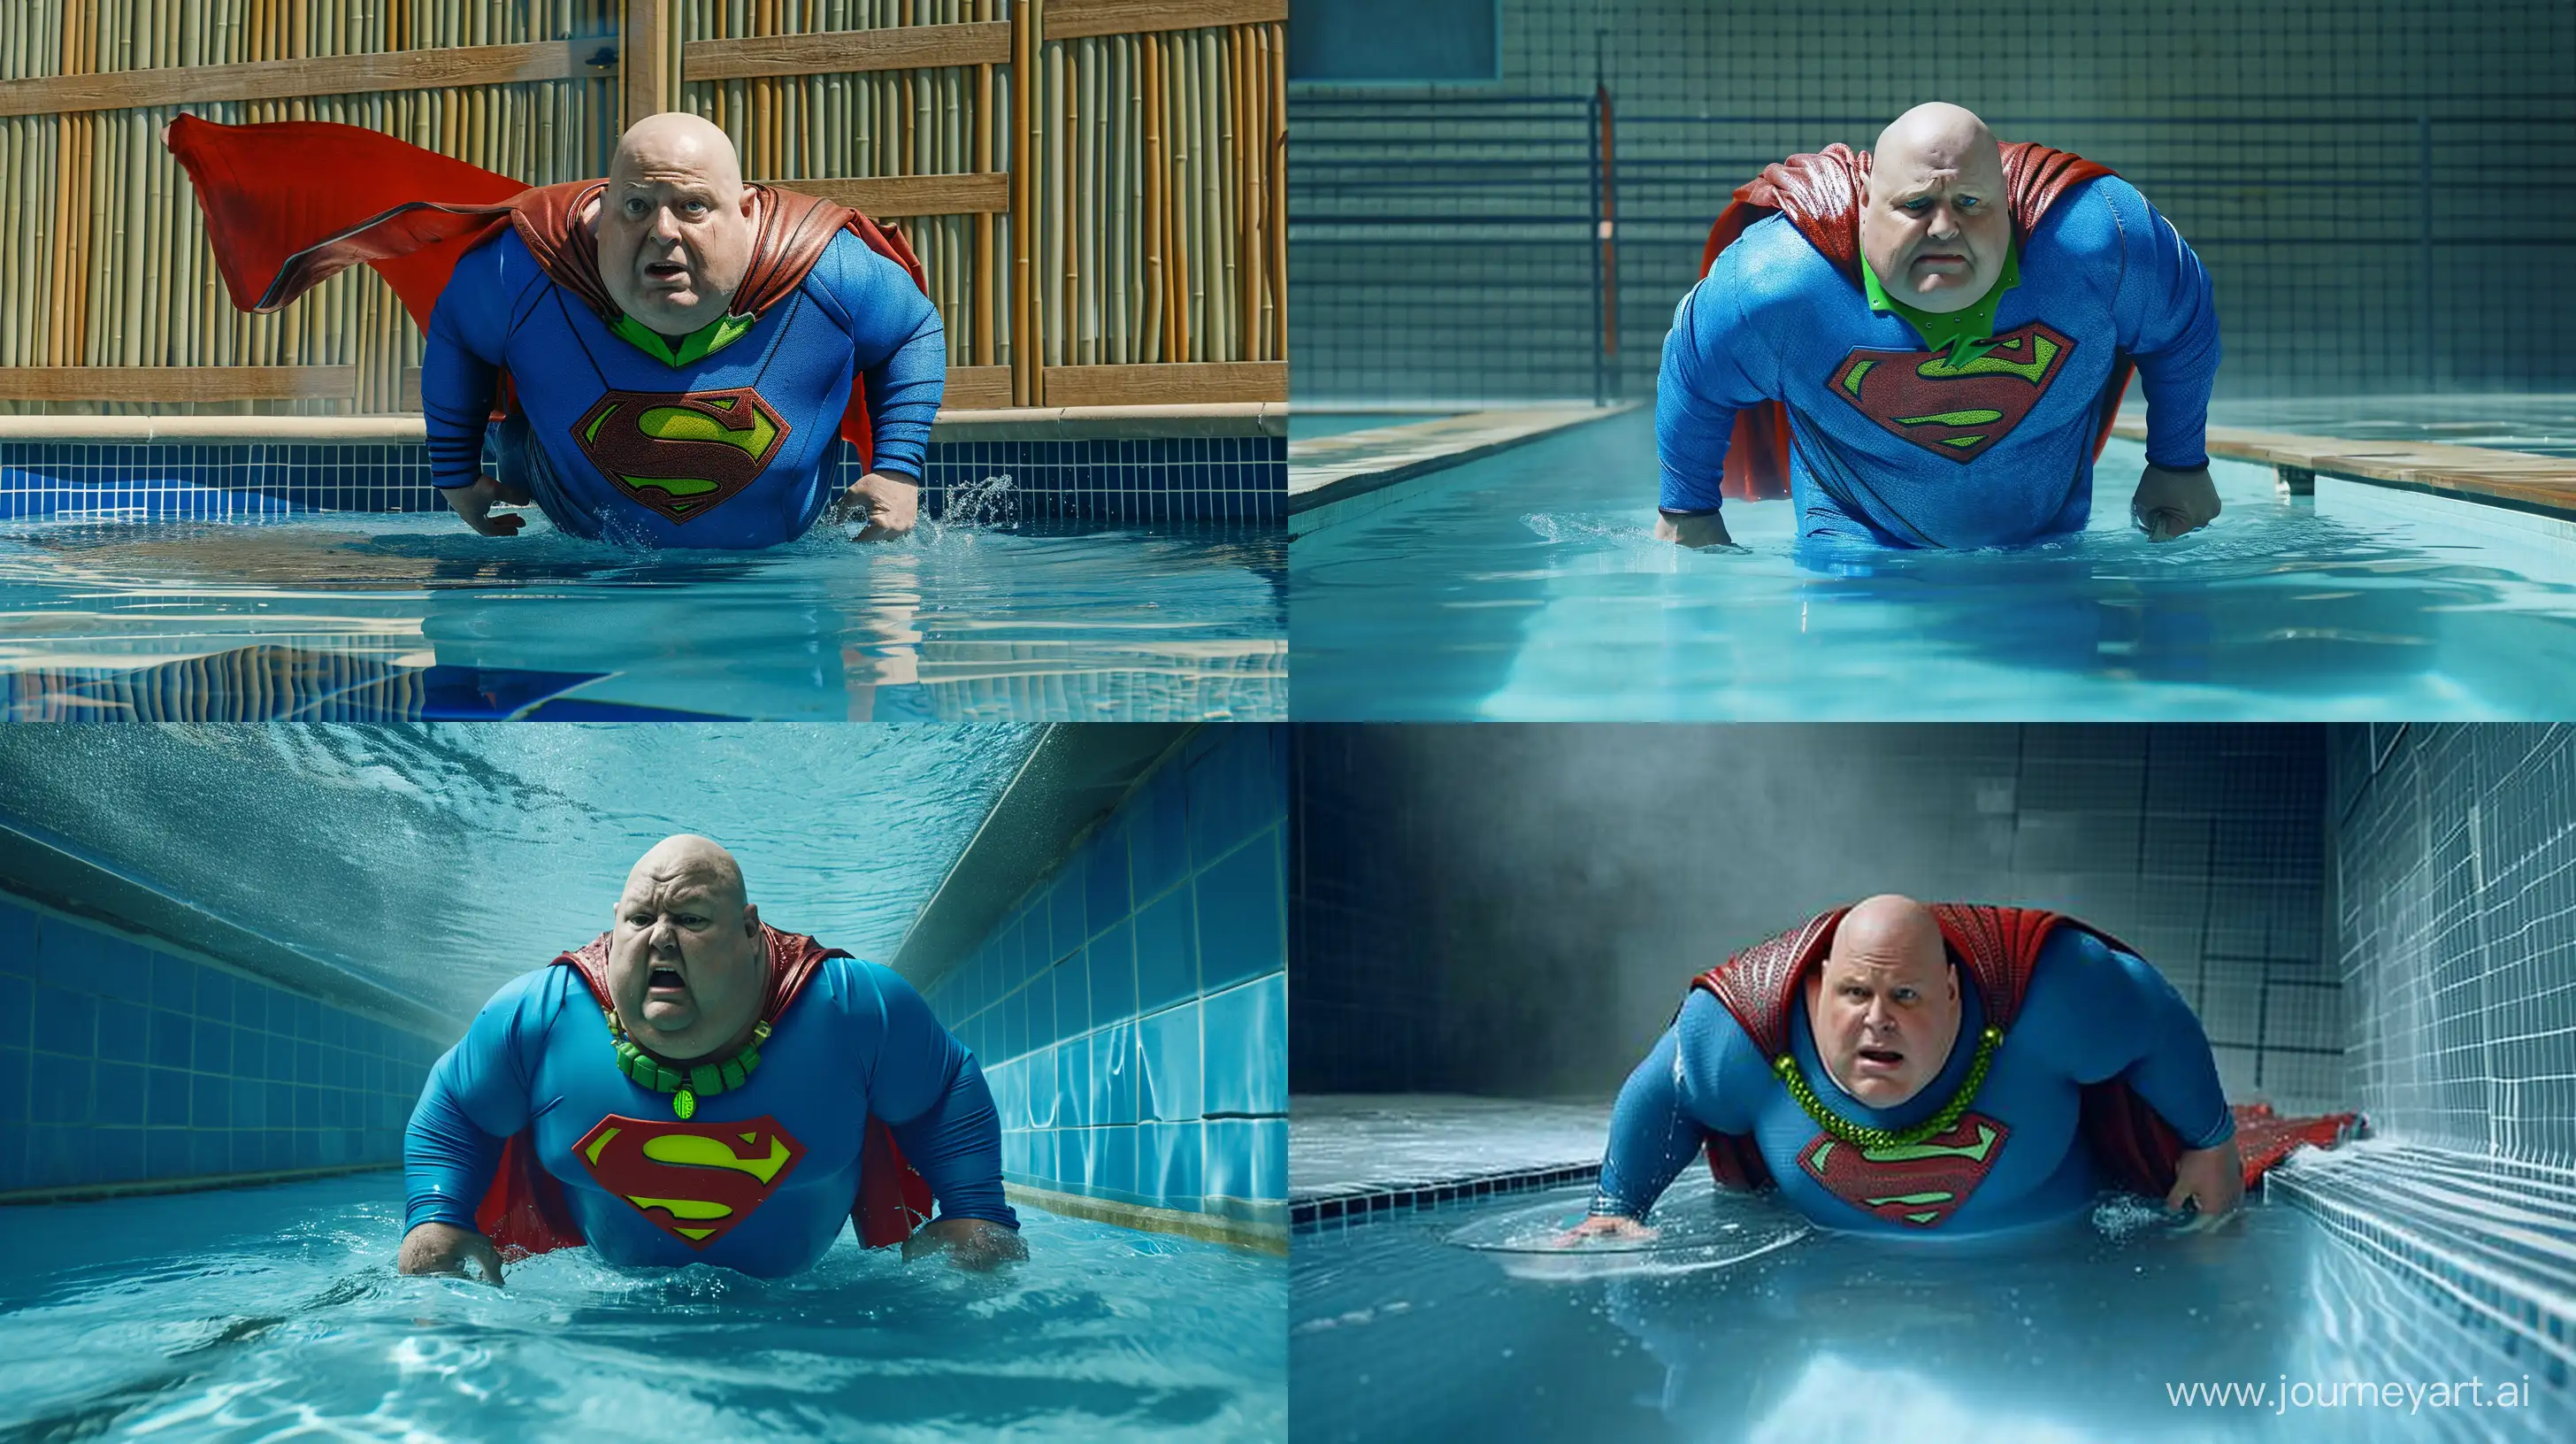 Fearful-Chubby-Superman-Crawling-in-Pool